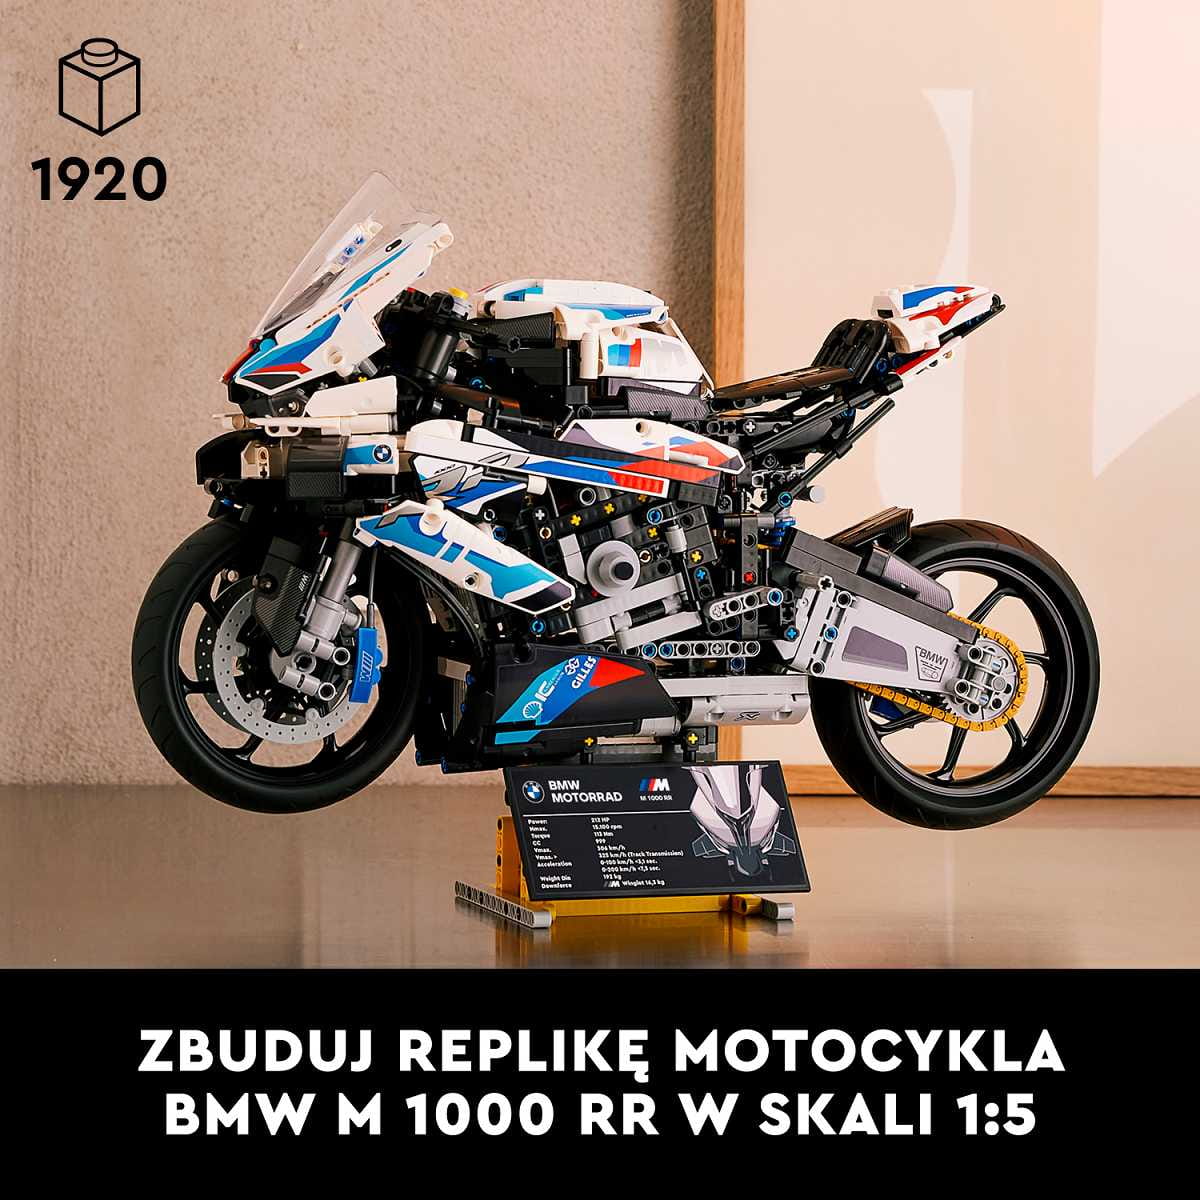 LEGO Technic Motorrad BMW M 1000 RR